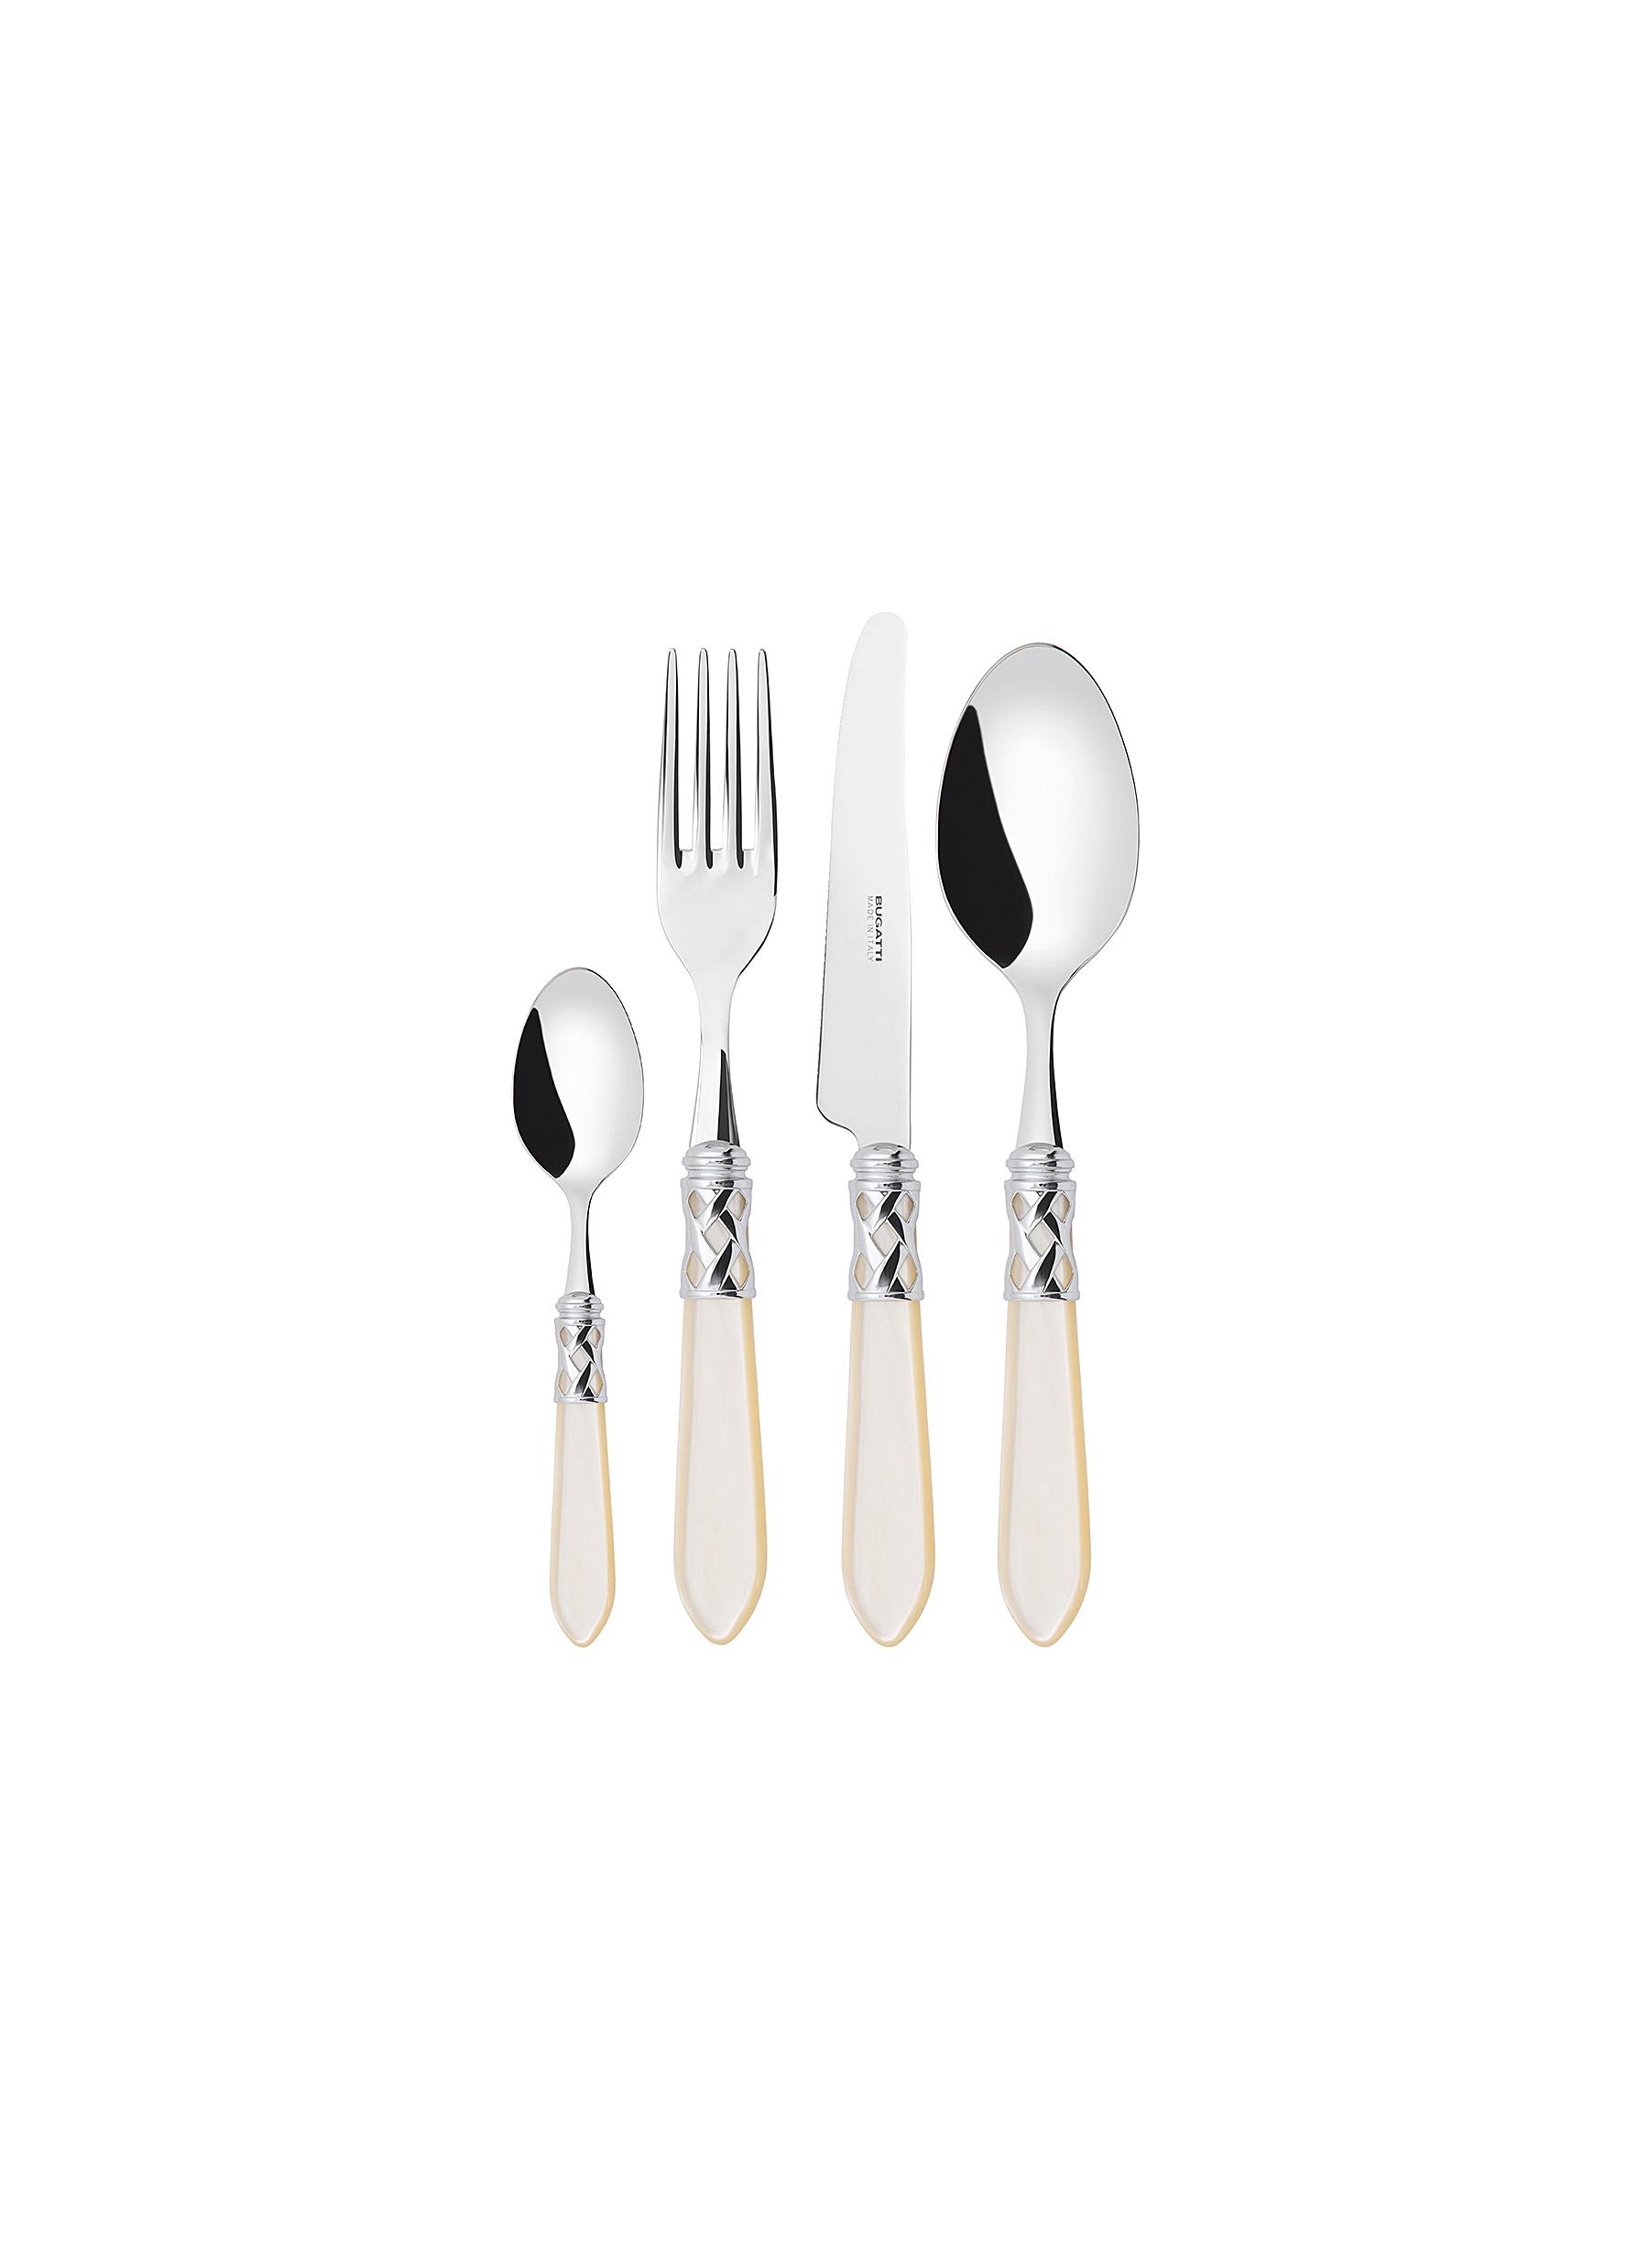 Aladdin’ Stainless Steel Cutlery Set - Ivory